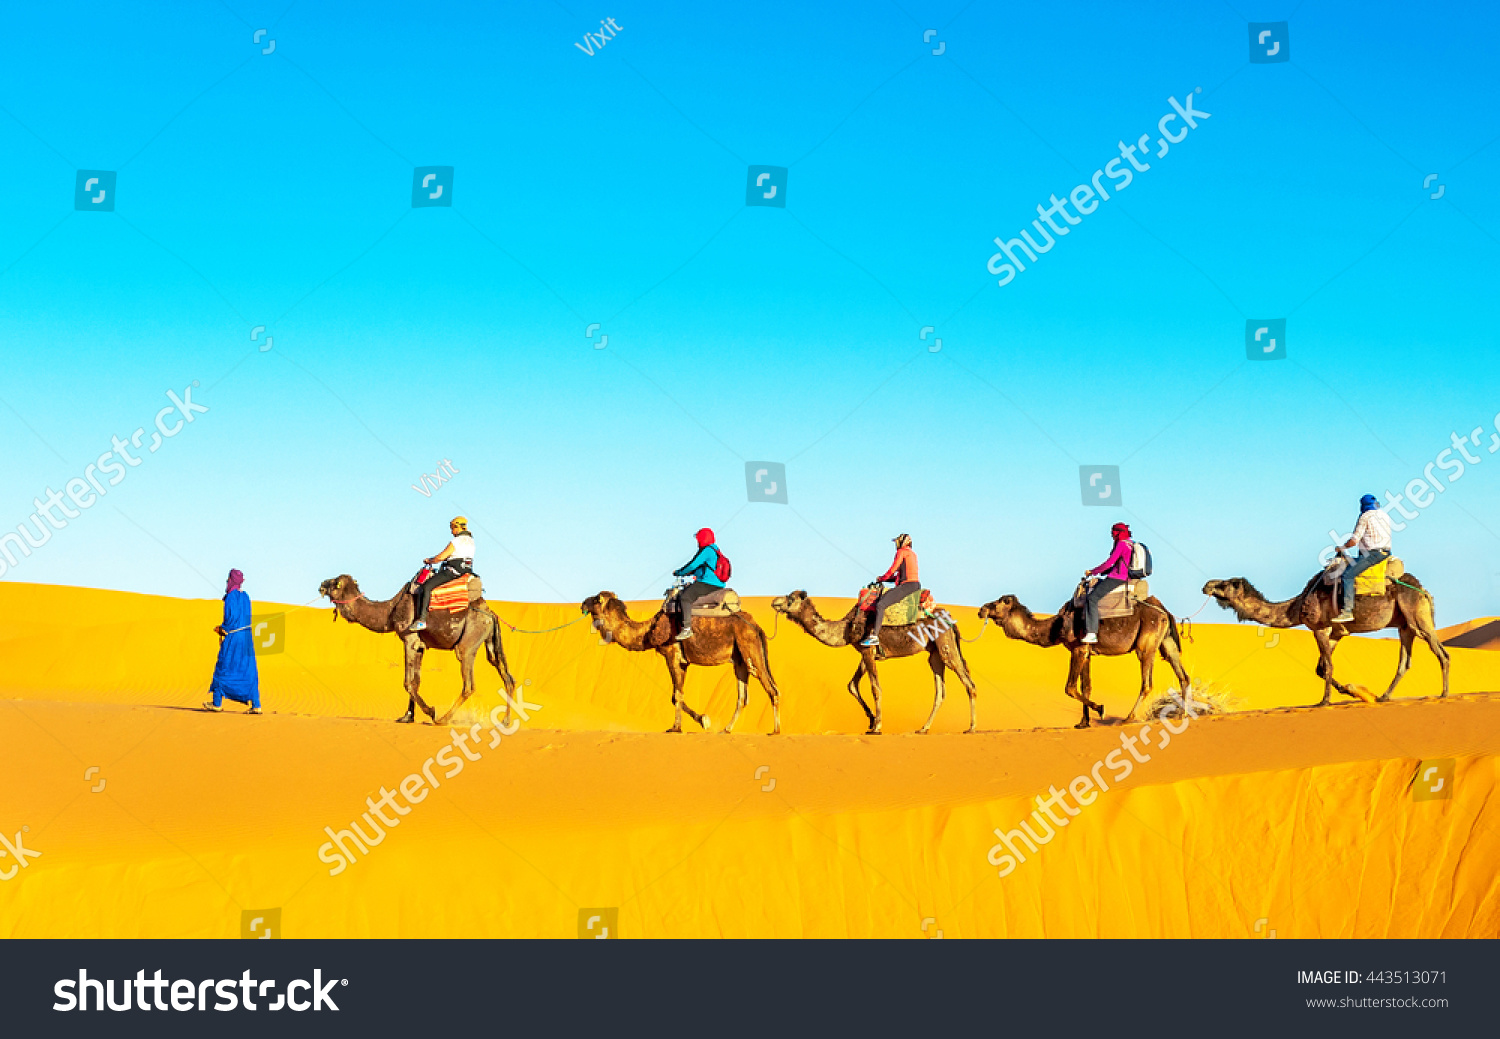 Camel Caravan Going Through Sand Dunes Stock Photo 443513071 | Shutterstock